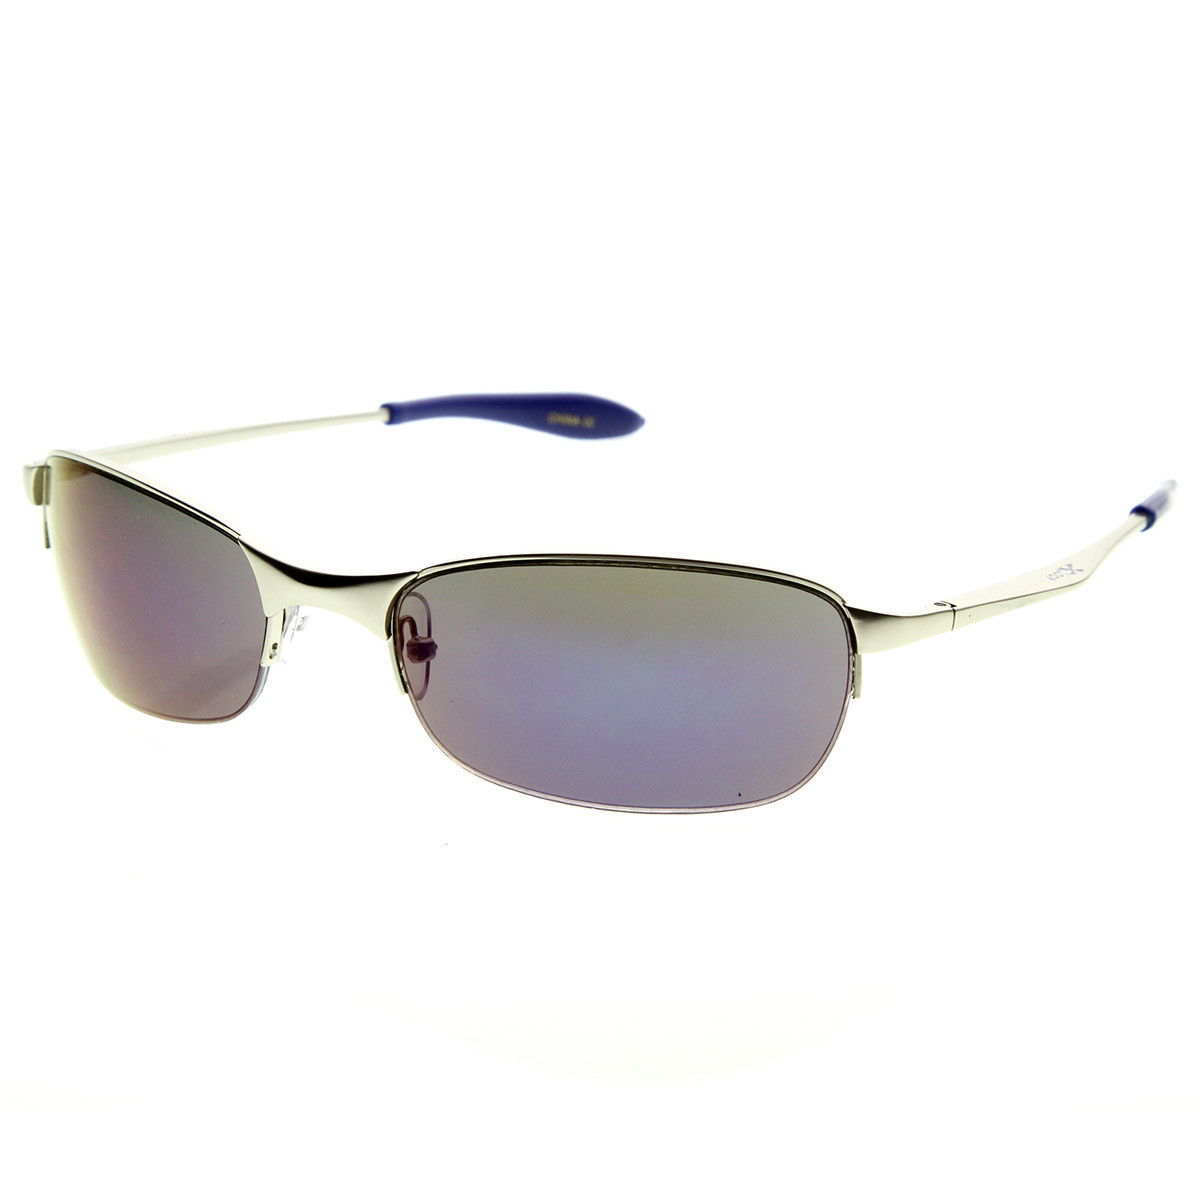 X-Loop Full Metal Sleek Semi-Rimless Oval Sports Frame Xloops Sunglasses - 8640 - Gunmetal